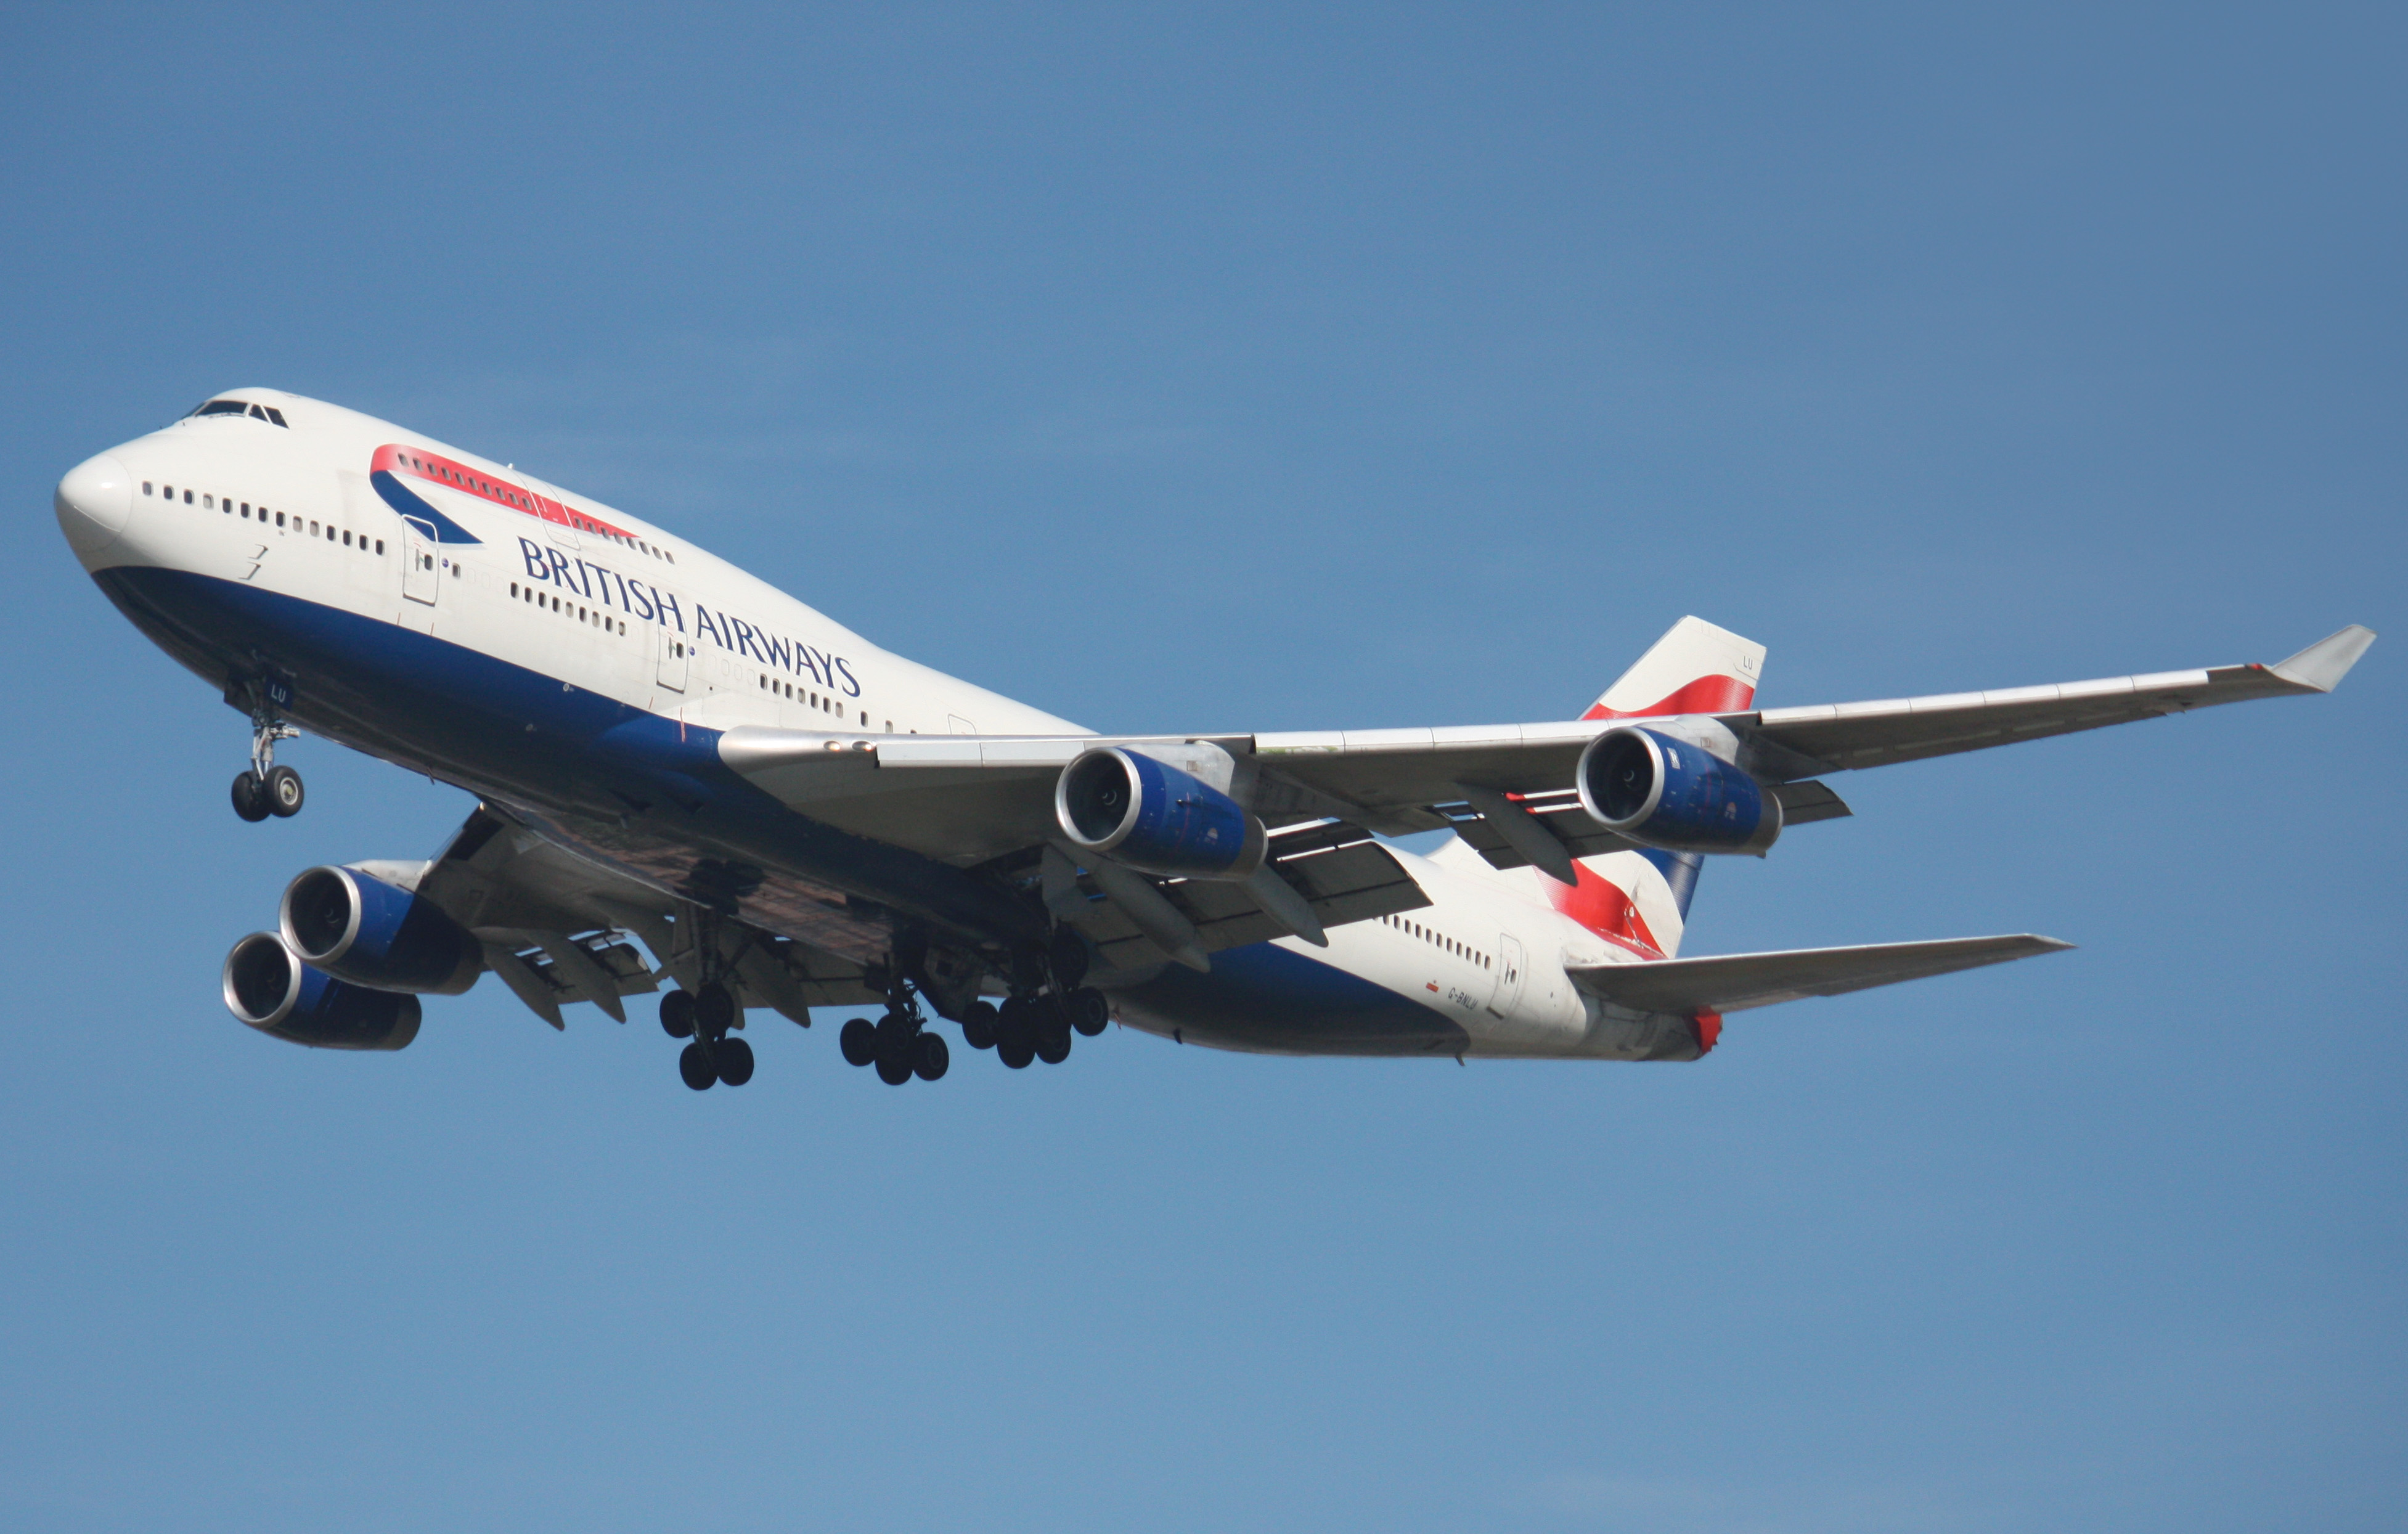 Boeing 747-400 previous